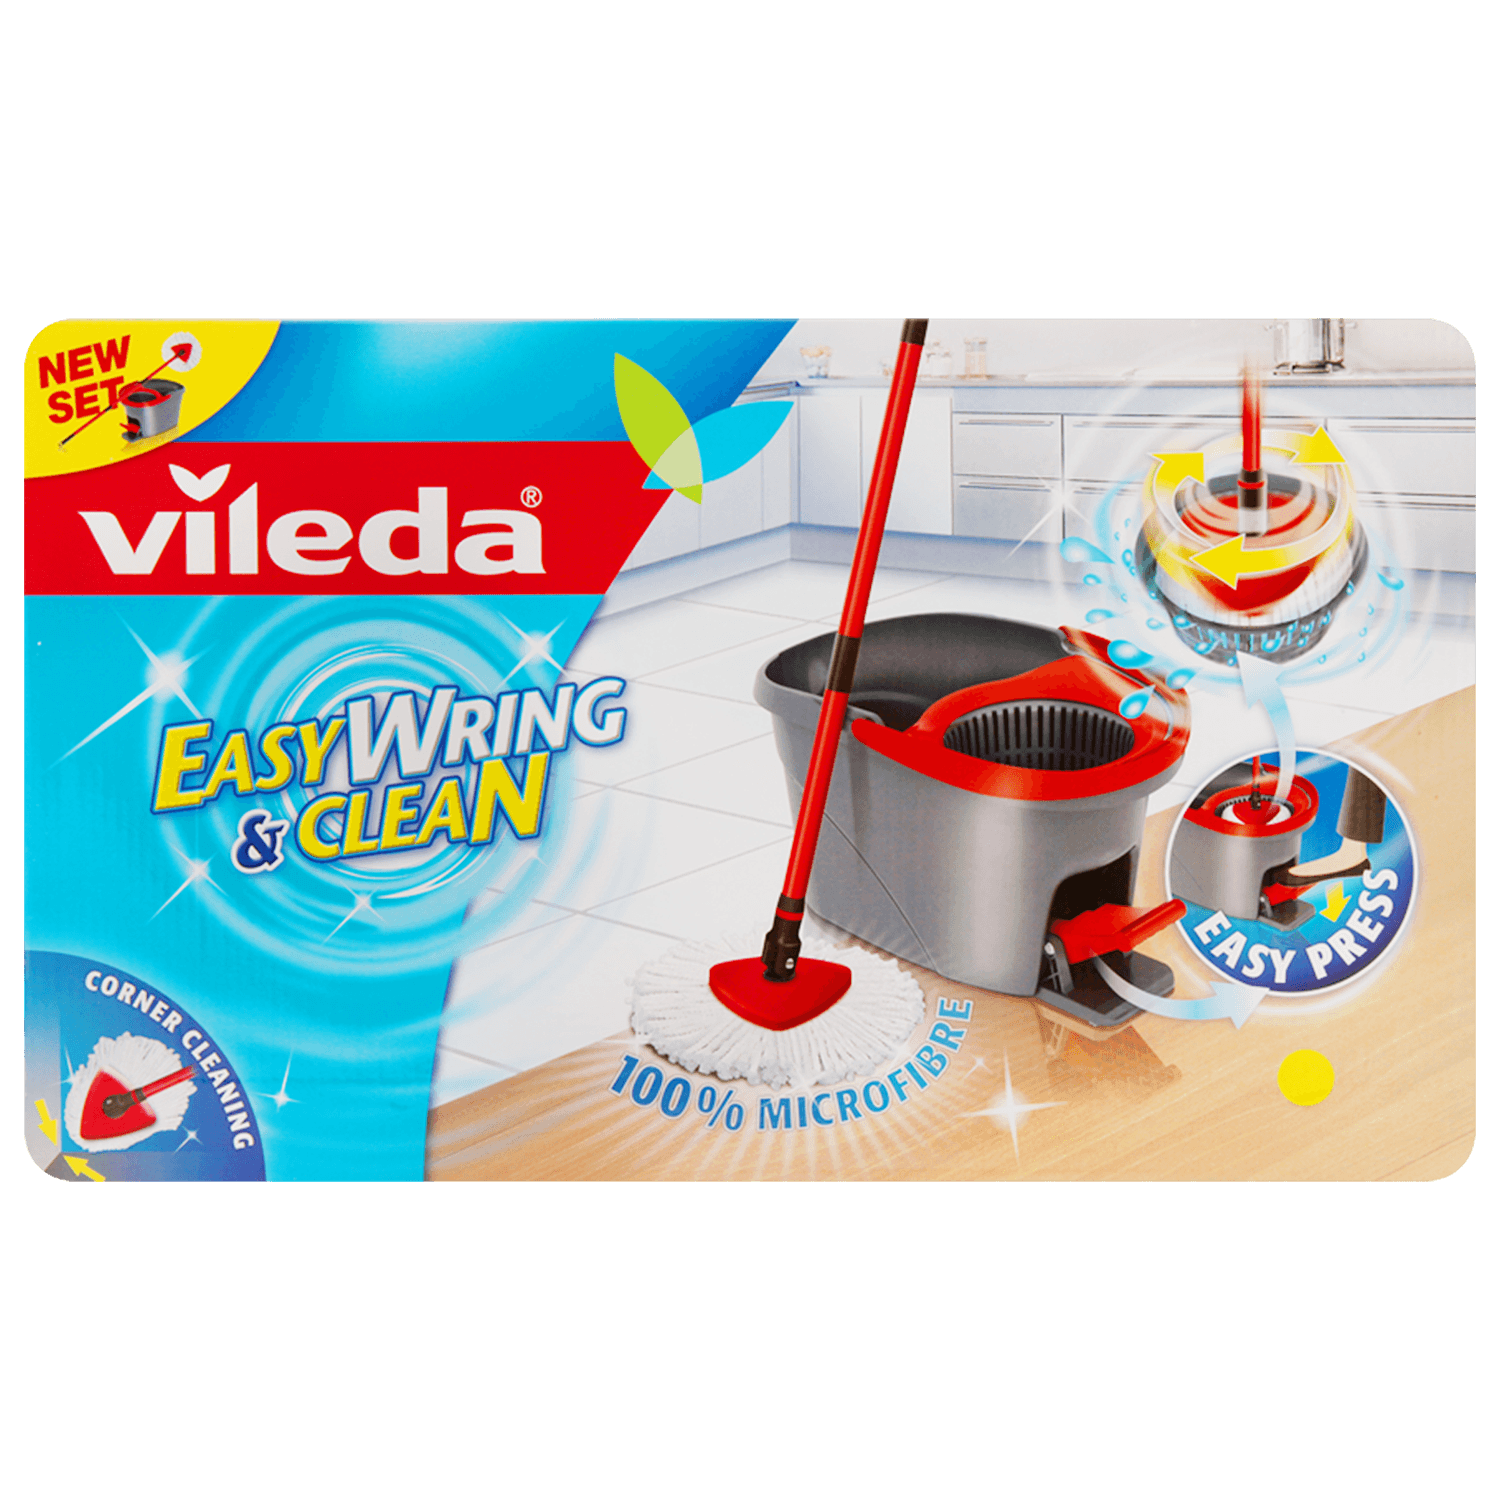 Balde pedal con mopa Easywring and clean Vileda